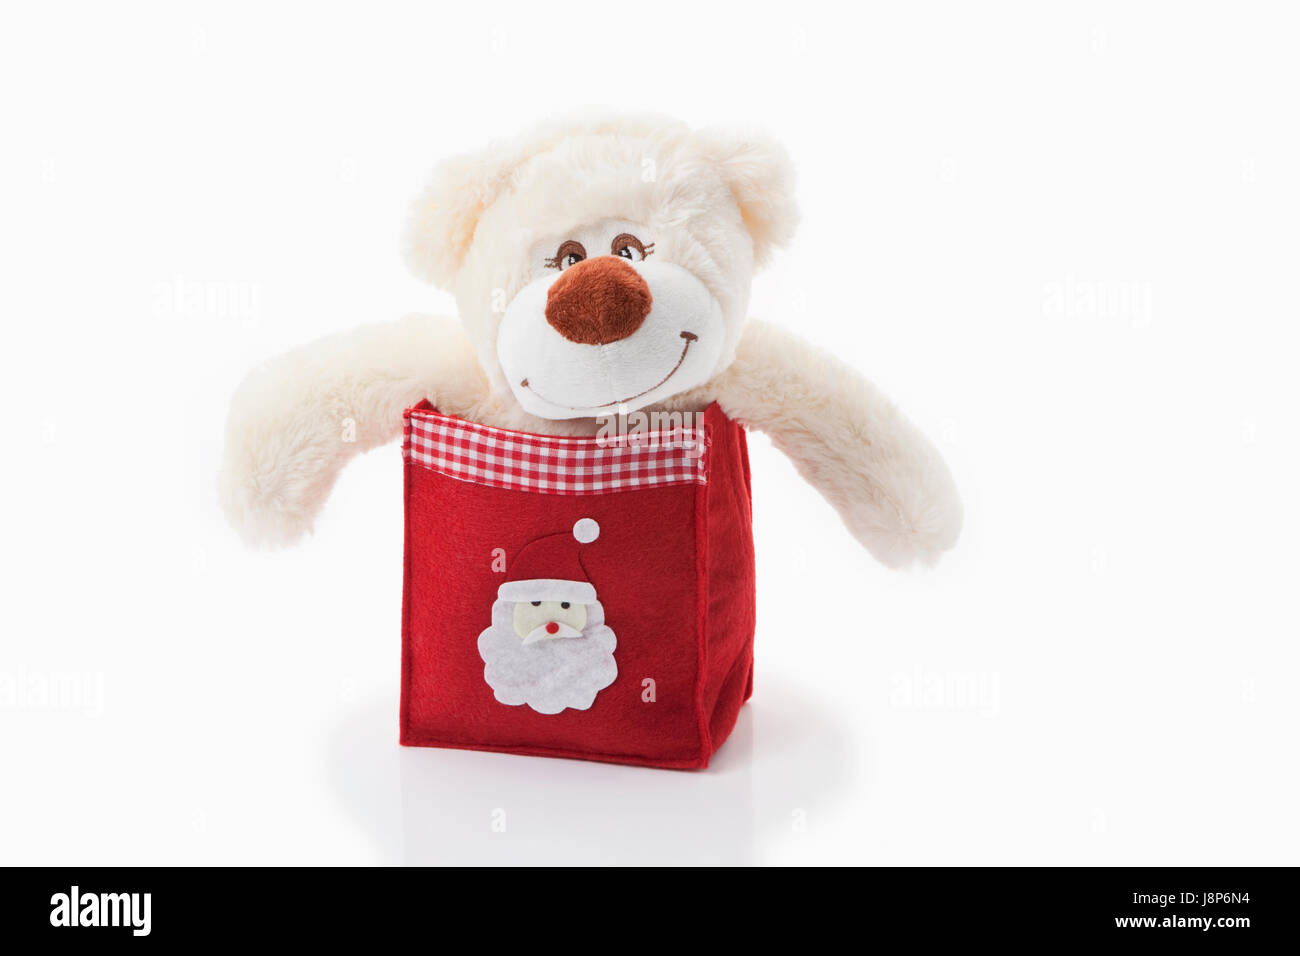 bear, toy, teddy, plush, child, friend, friendship, game, tournament, play, Stock Photo